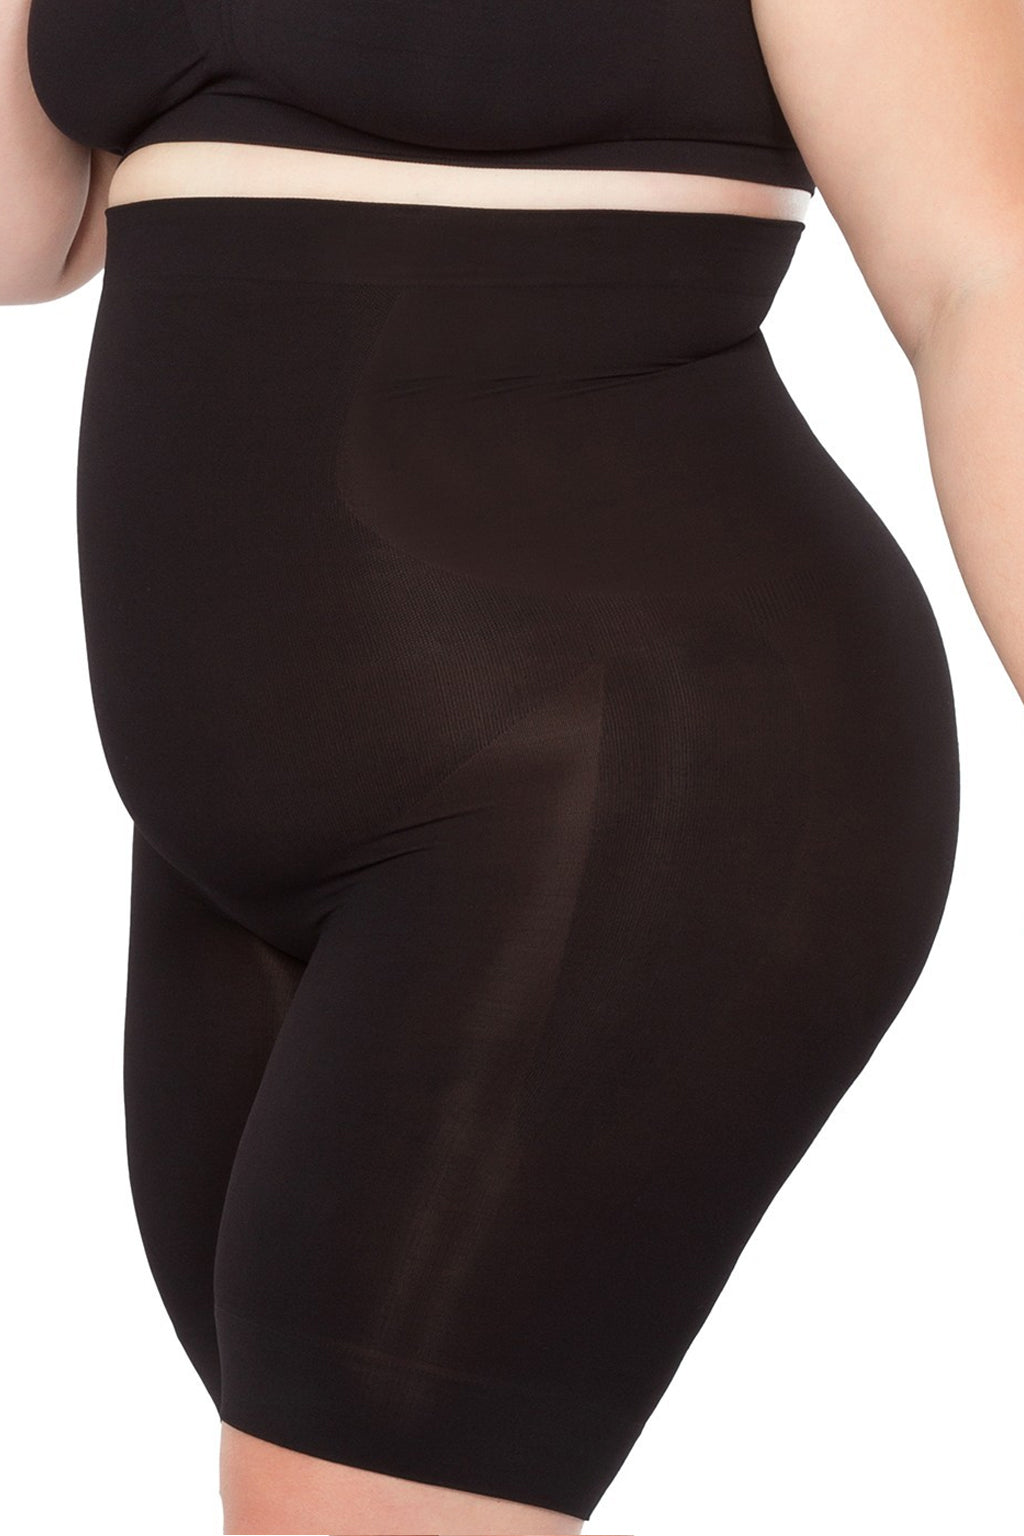 Brazilian Bermuda shapewear high waist, curves enhancing l